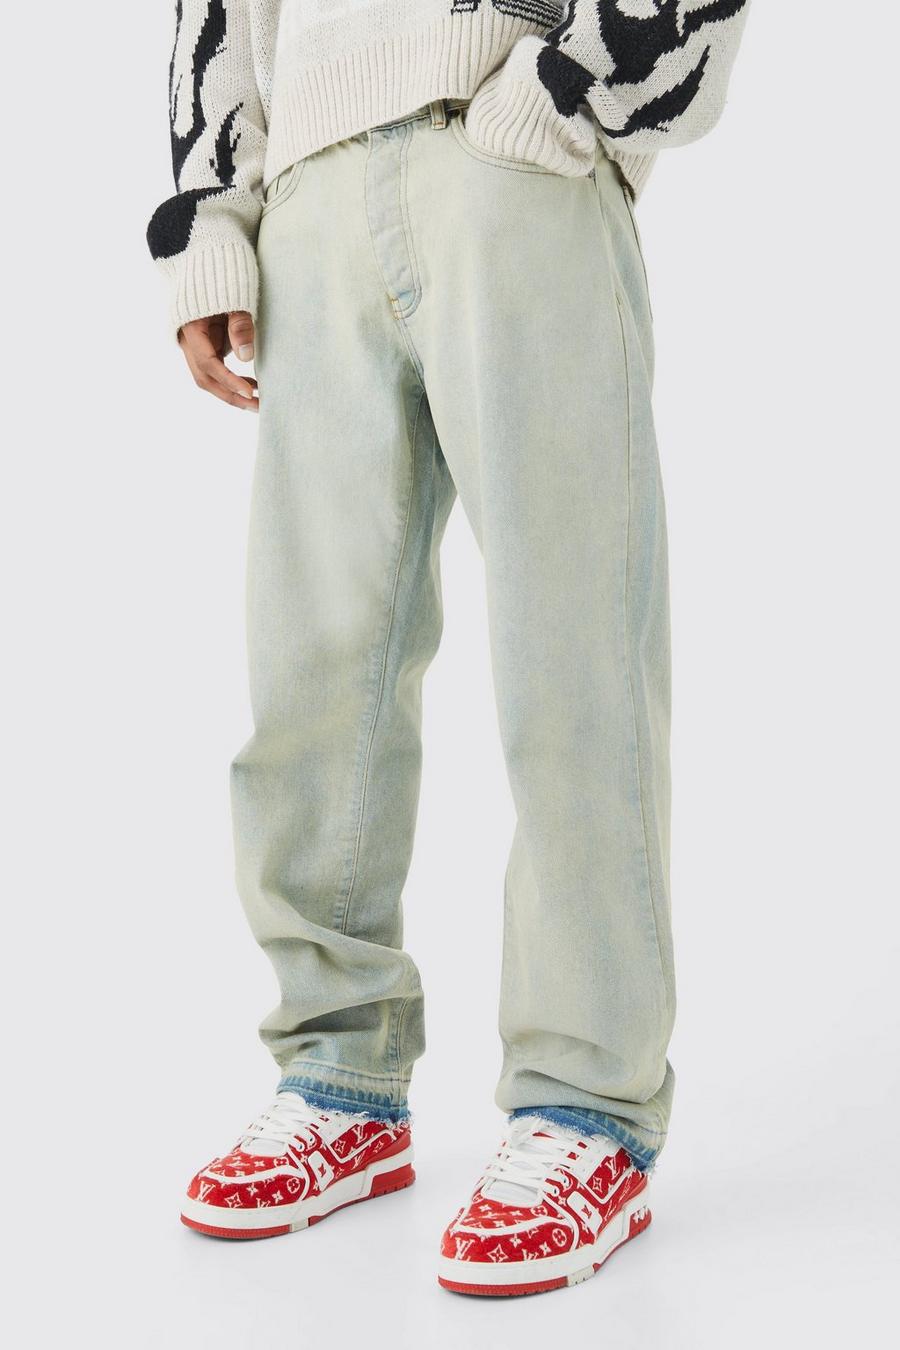 Jeans rilassati slavati in denim rigido candeggiato, Bleach wash image number 1